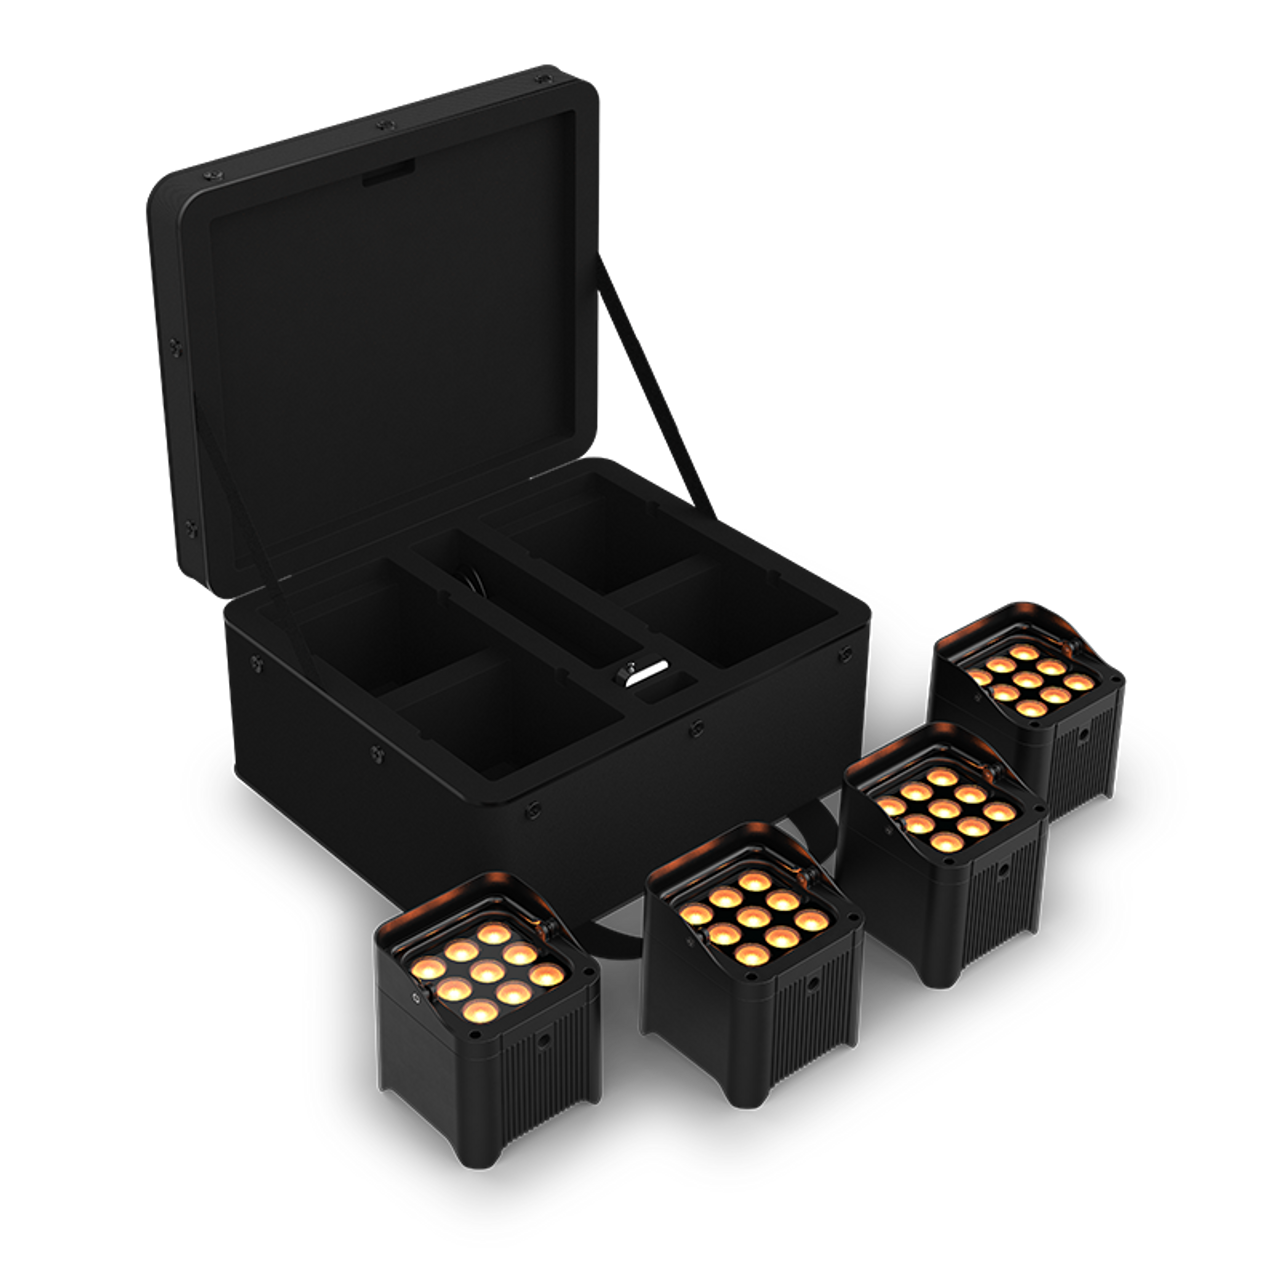 Chauvet DJ FREEDOMPARQ9X4 complete lighting kit that includes four Freedom Par Q9 (